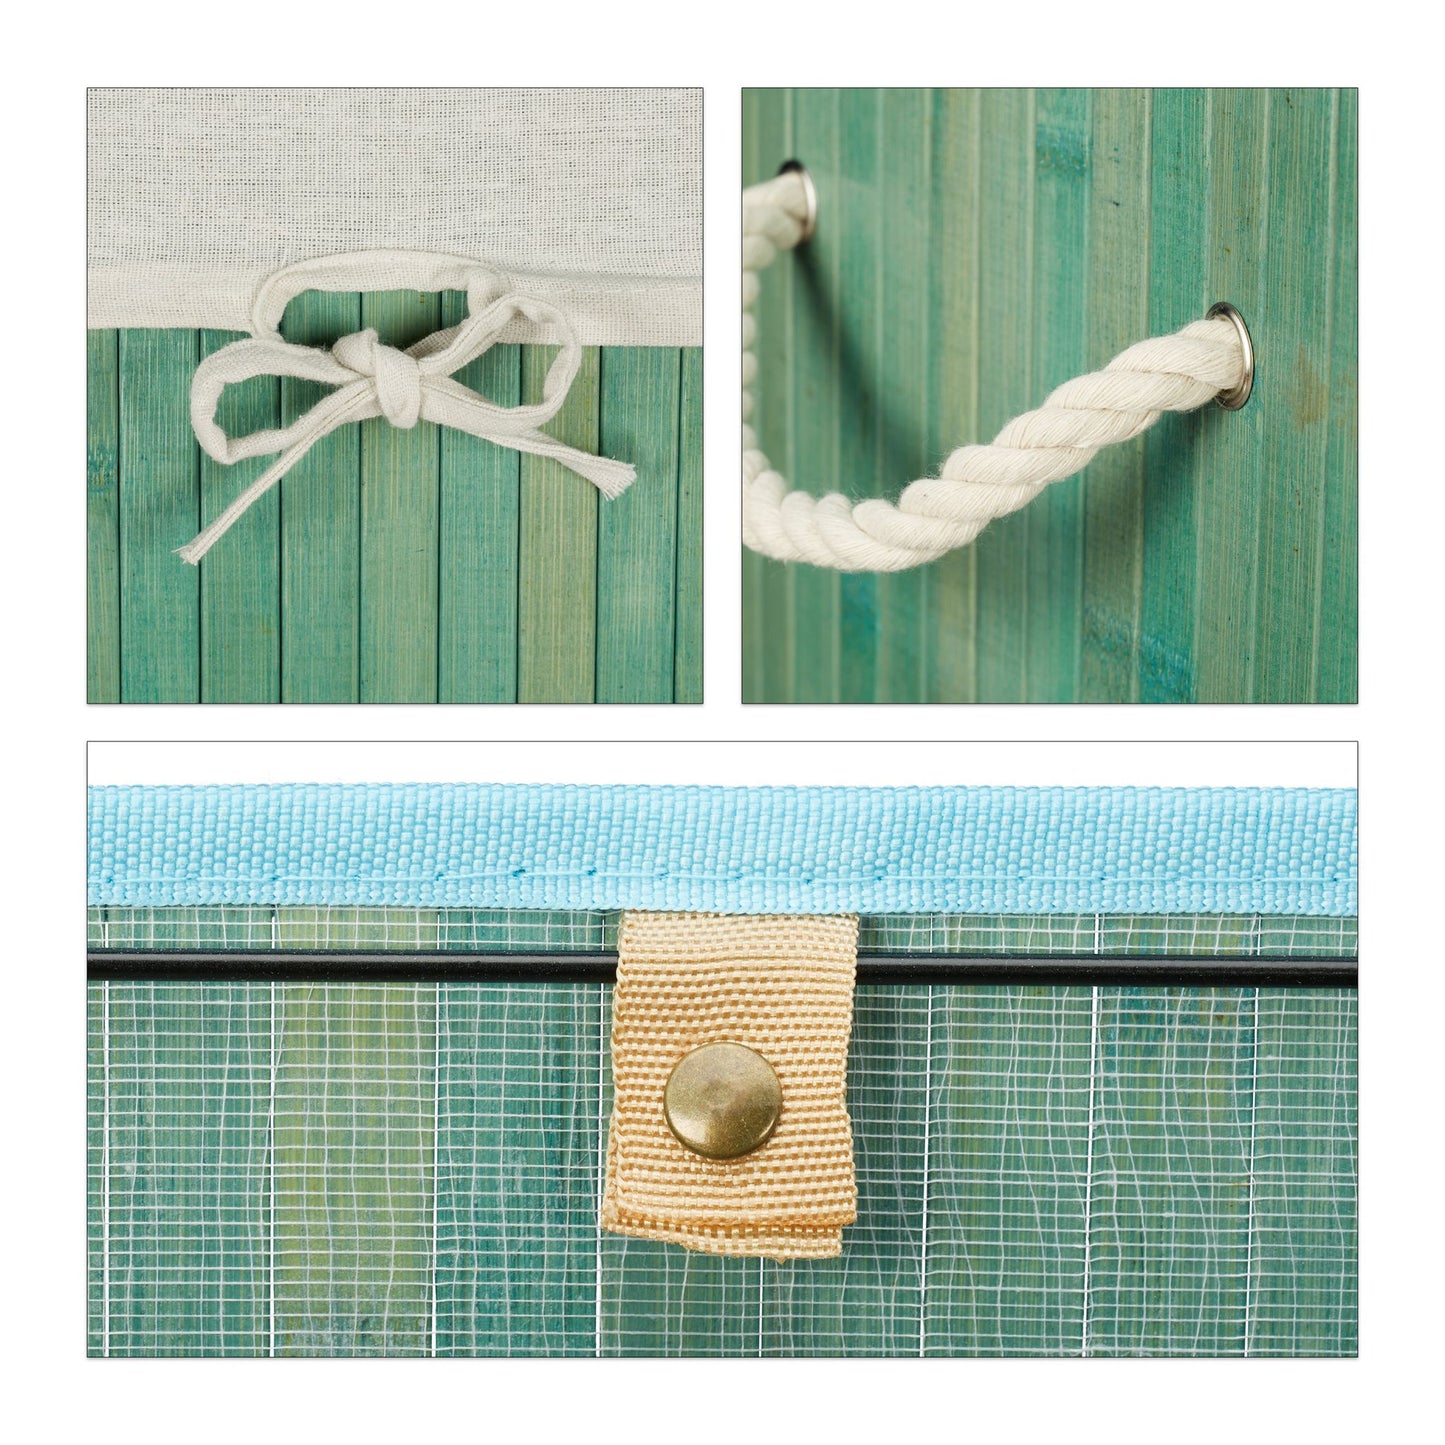 RelaxDays Rectangular Bamboo Hamper Bamboo Bathrooms